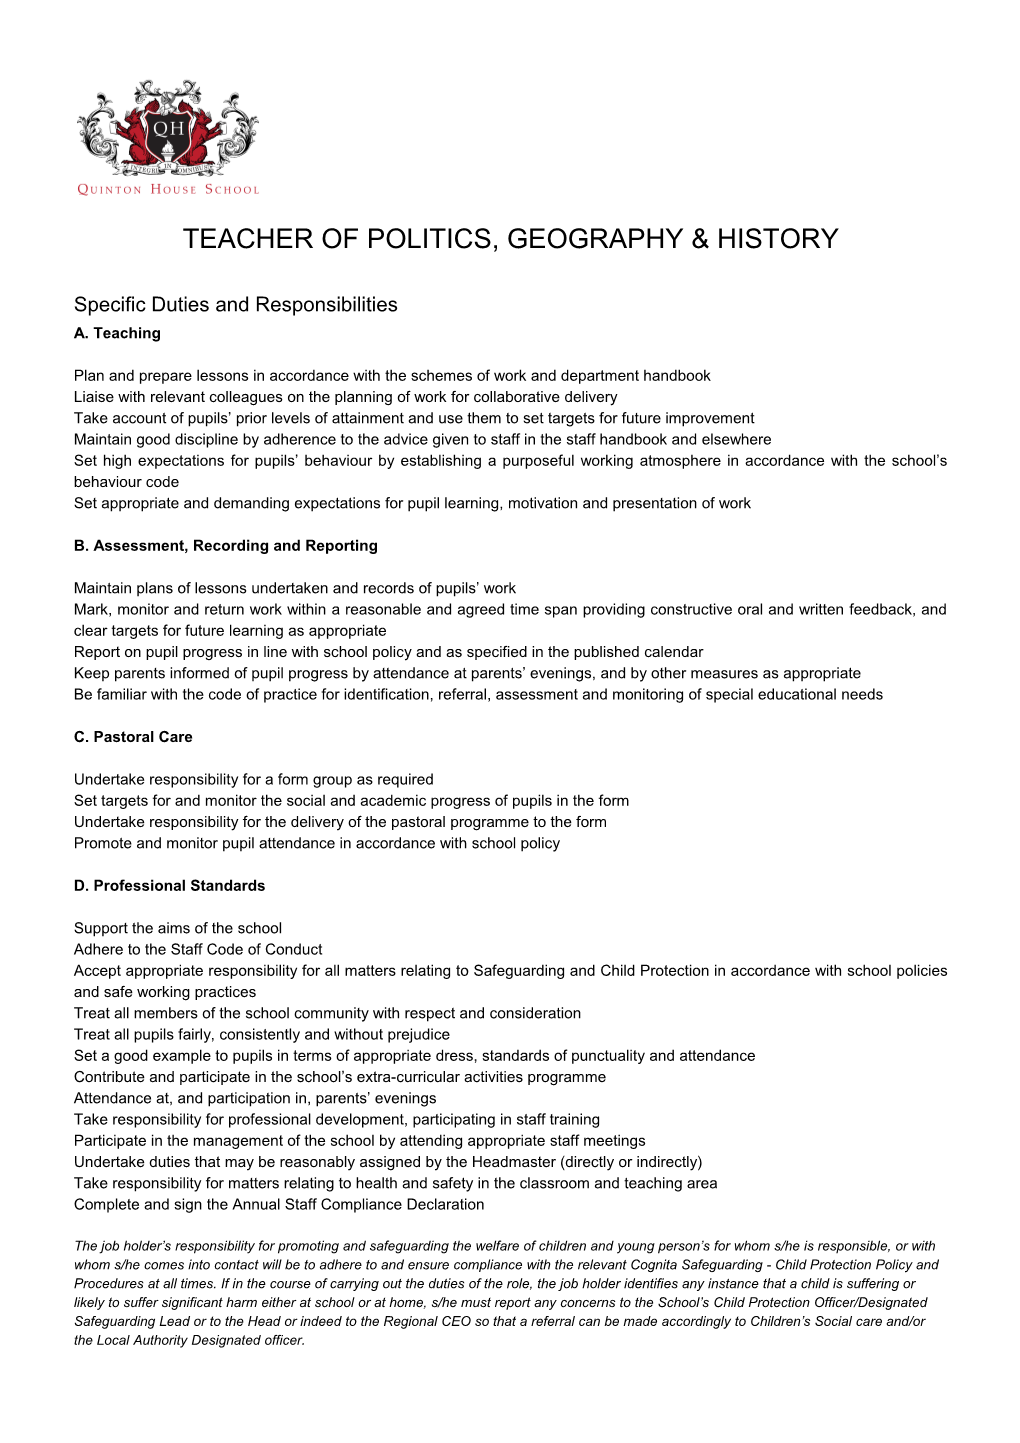 Teacher of Politics, Geography & History